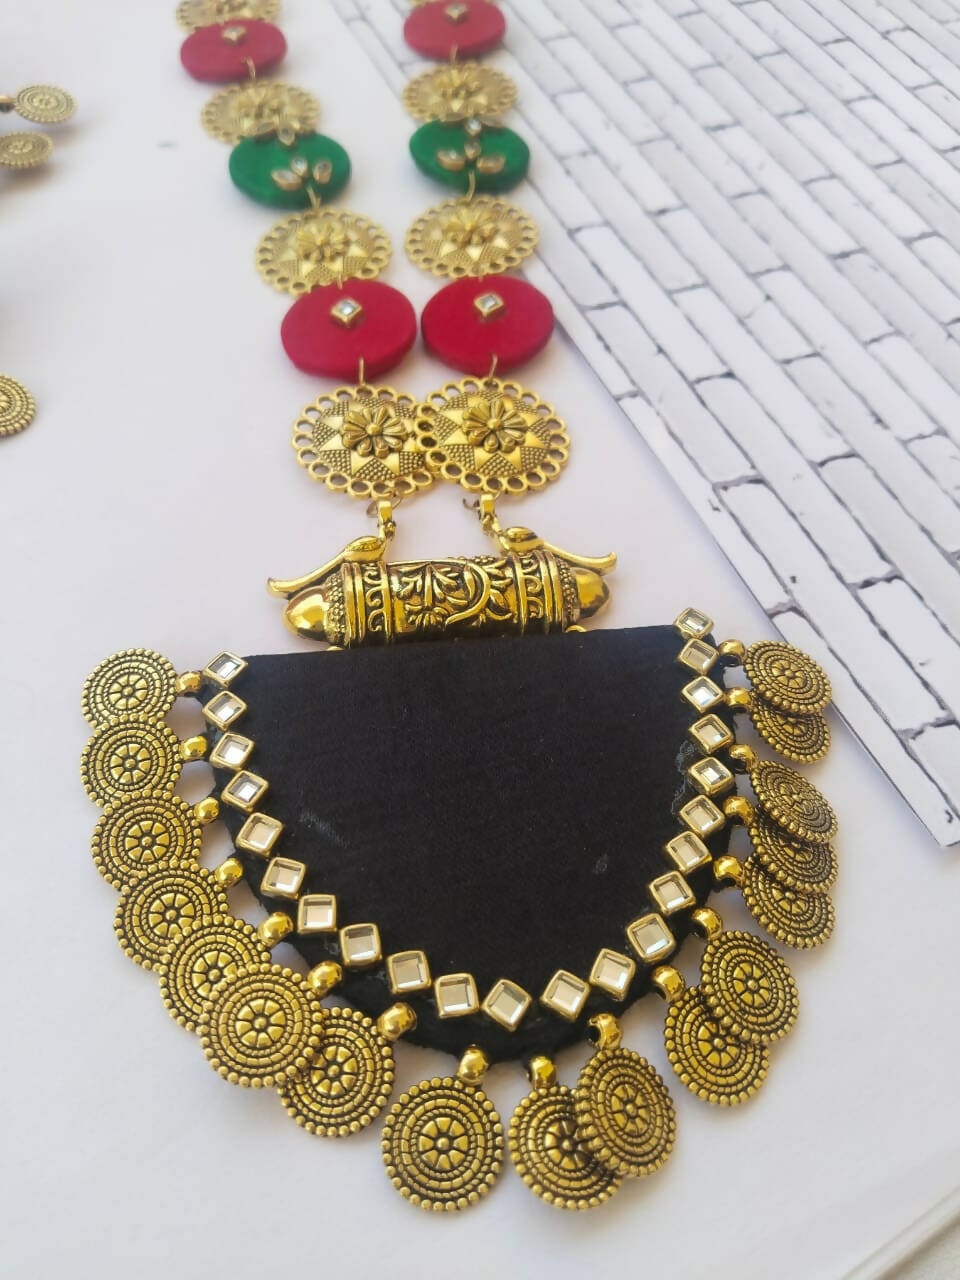 Red Green Golden Metal Necklace Earrings Long Set